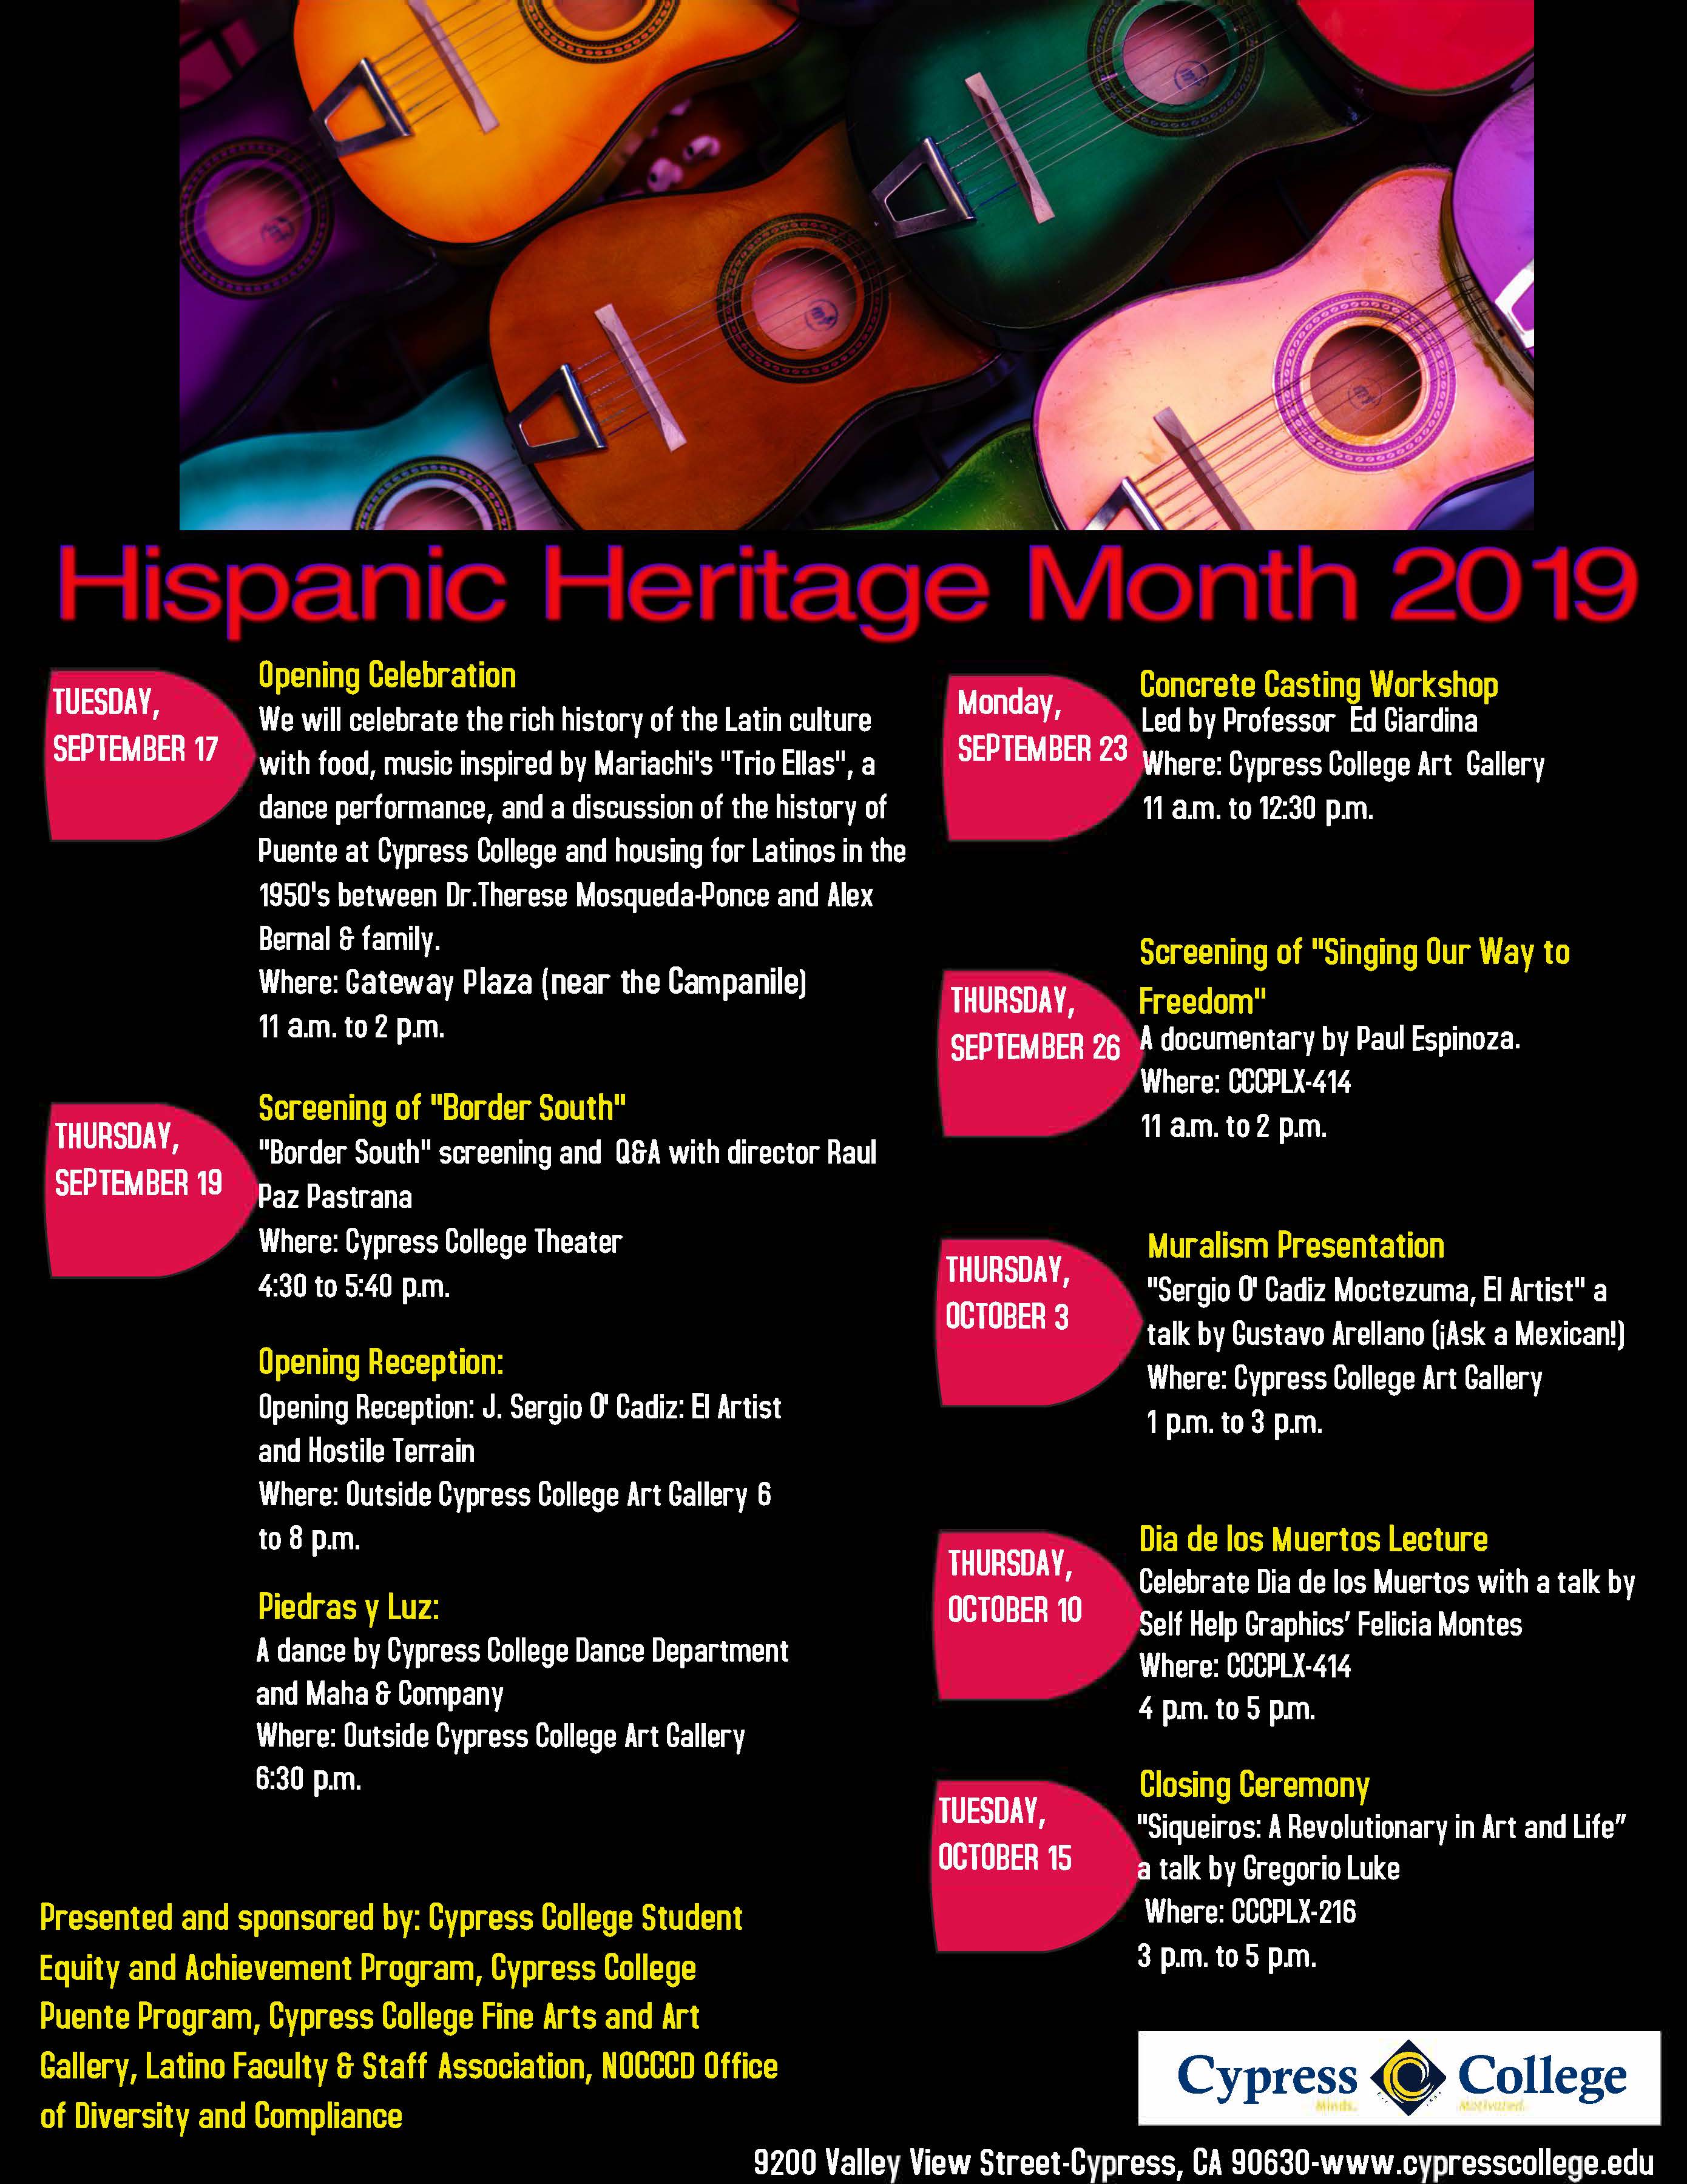 2019 Hispanic Heritage Month events